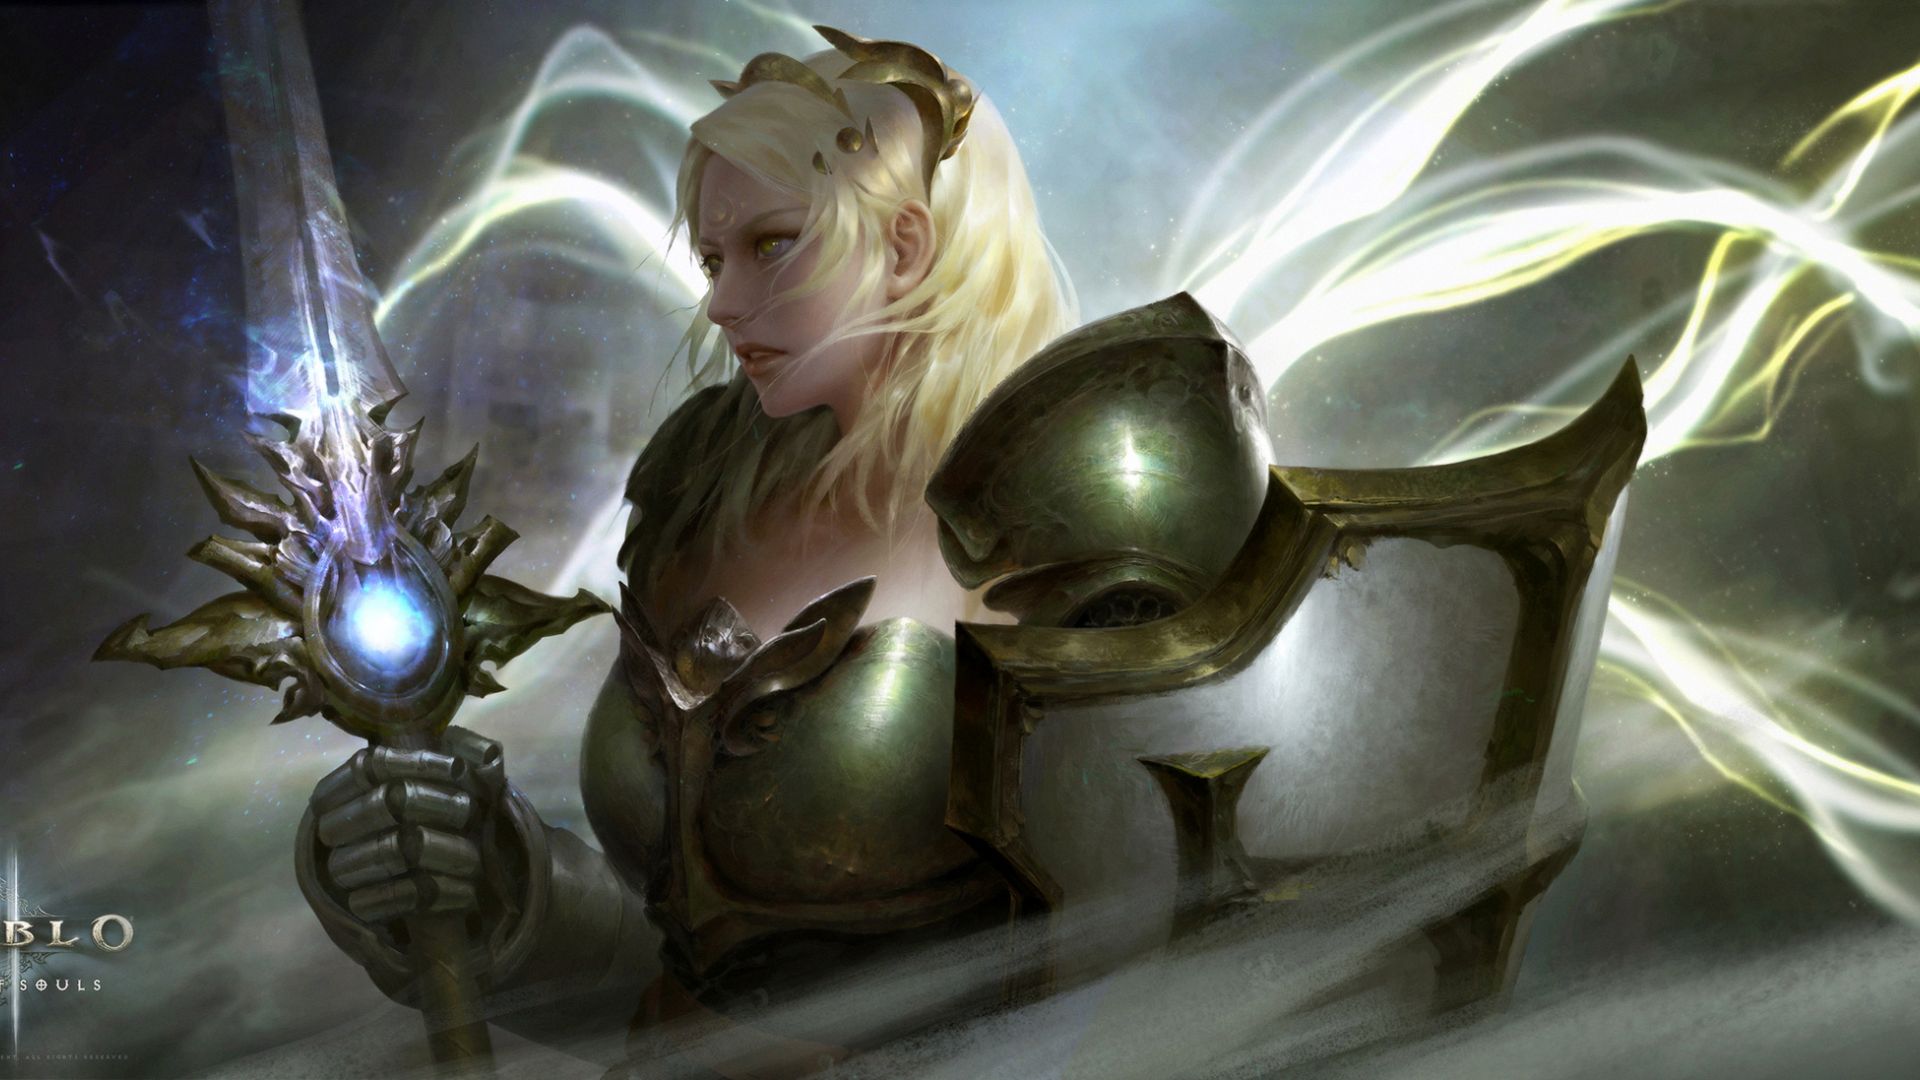 Wallpaper Crusader, Diablo III, game, girl warrior